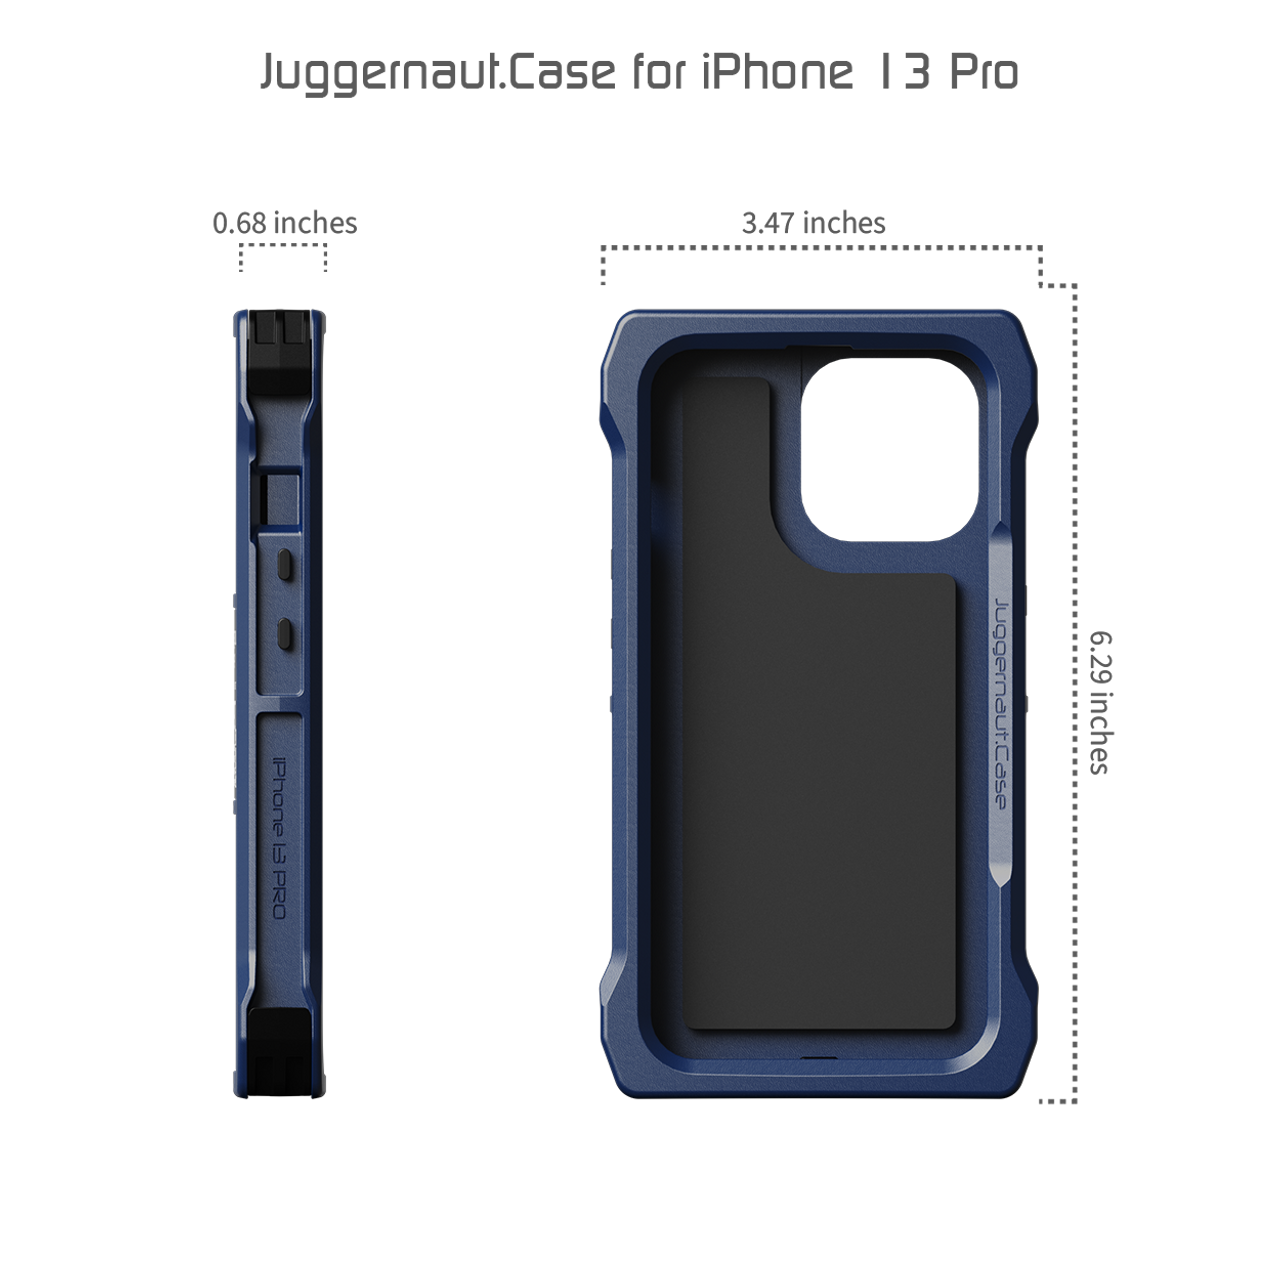 Juggernaut.Case™ iPhone 13 Pro IMPCT Phone Case JG.IMPCT.iPhone13P.